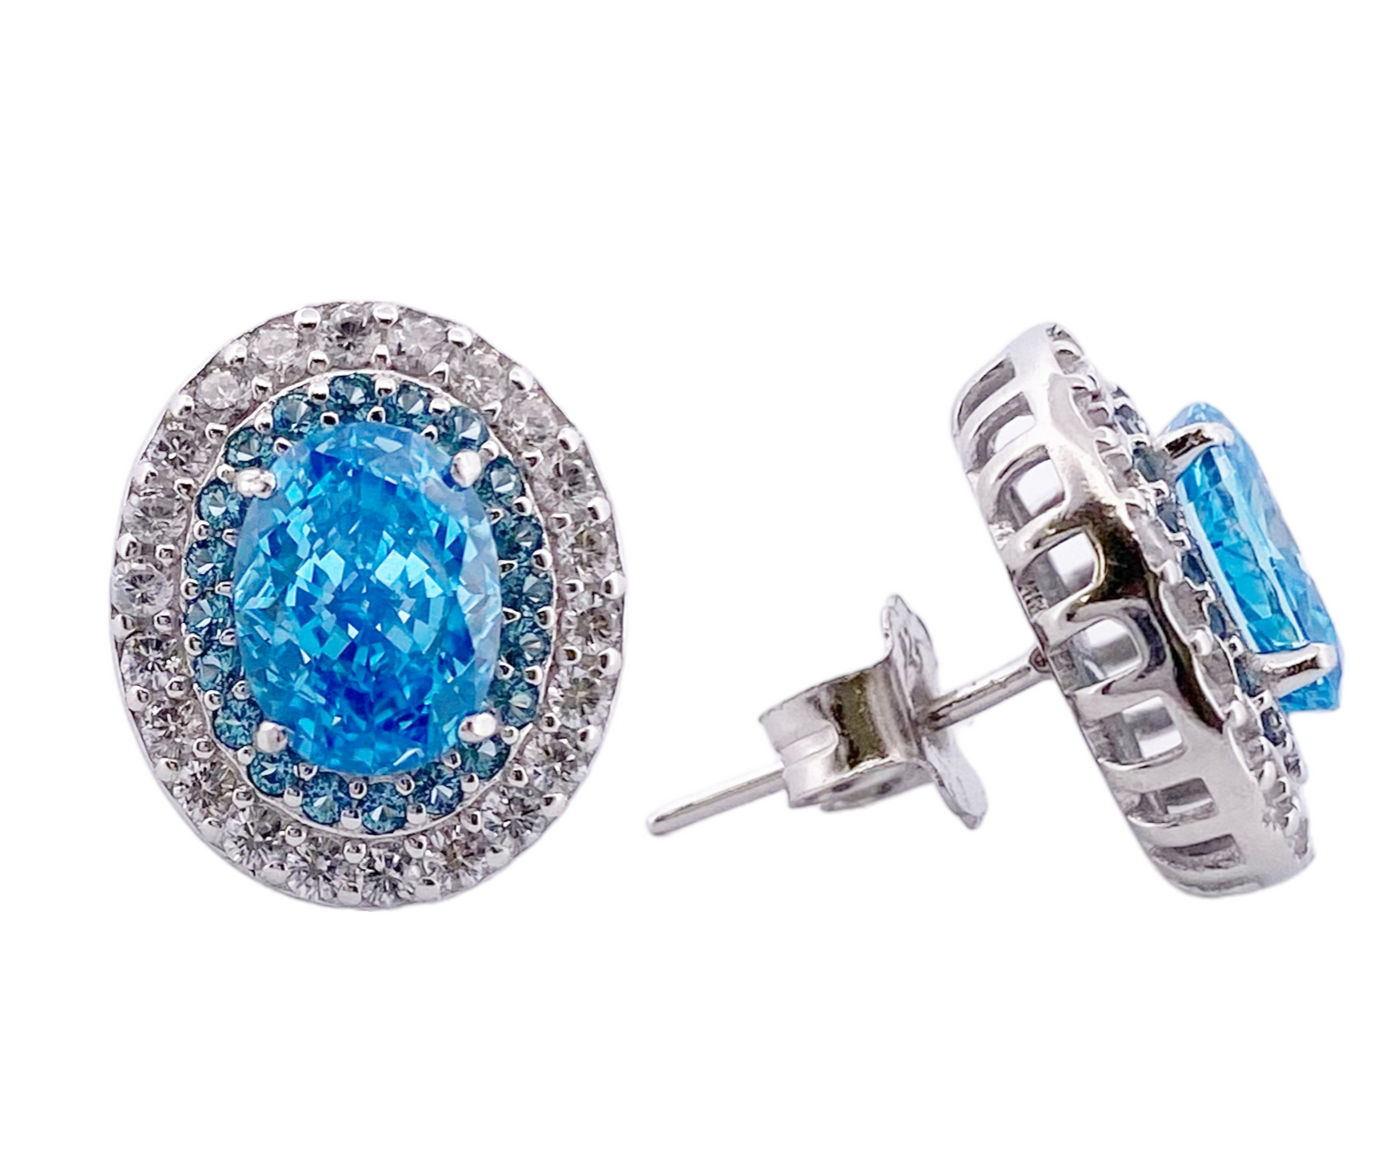 Silver stud earrings with oval diamond replica stones